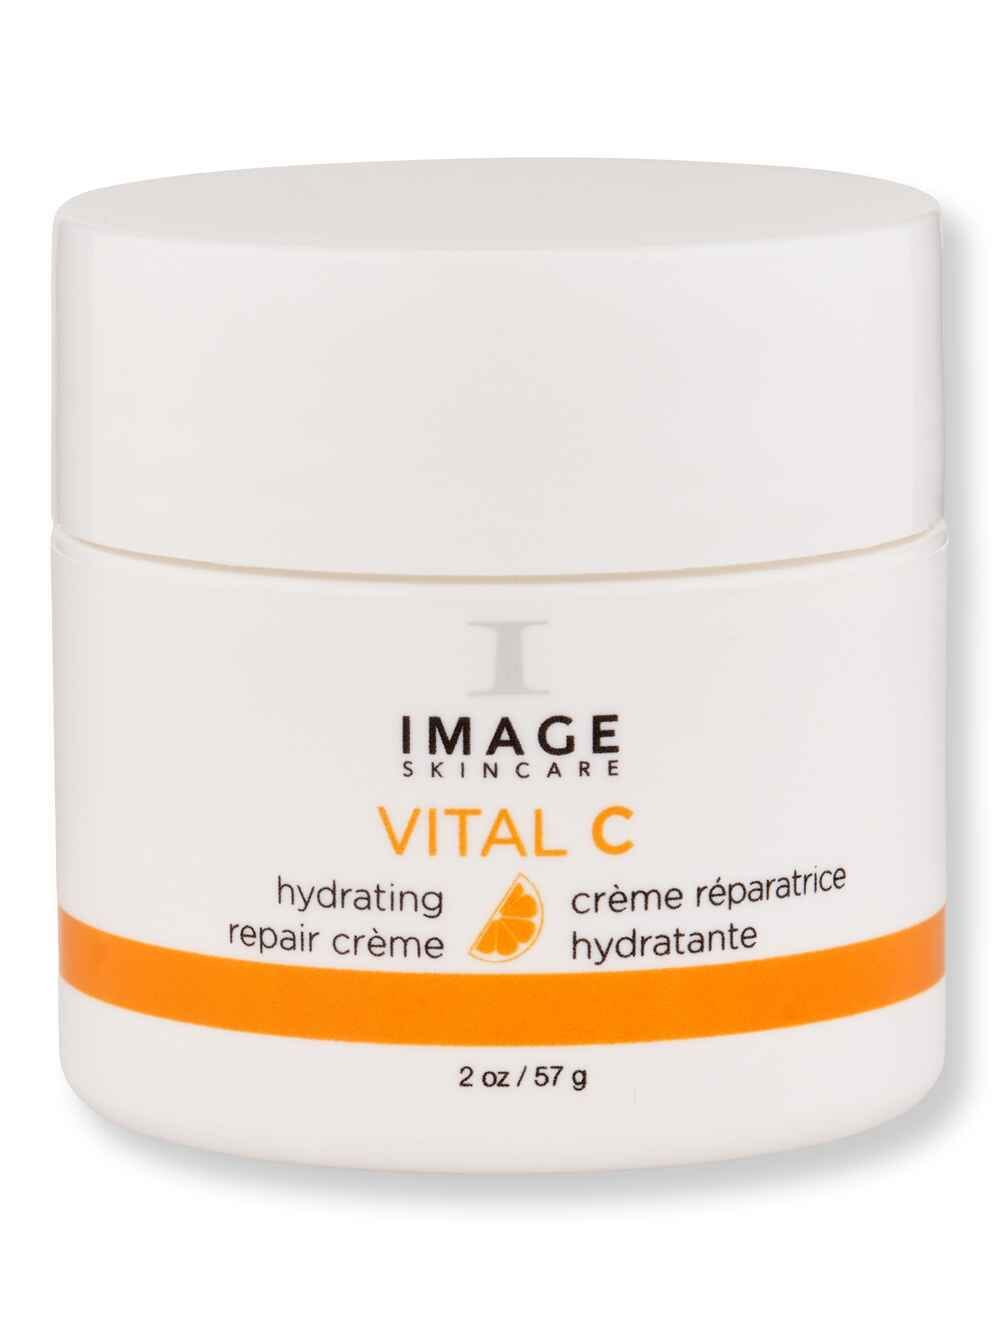 Image Skin Care Image Skin Care Vital C Hydrating Repair Creme 2 oz Face Moisturizers 